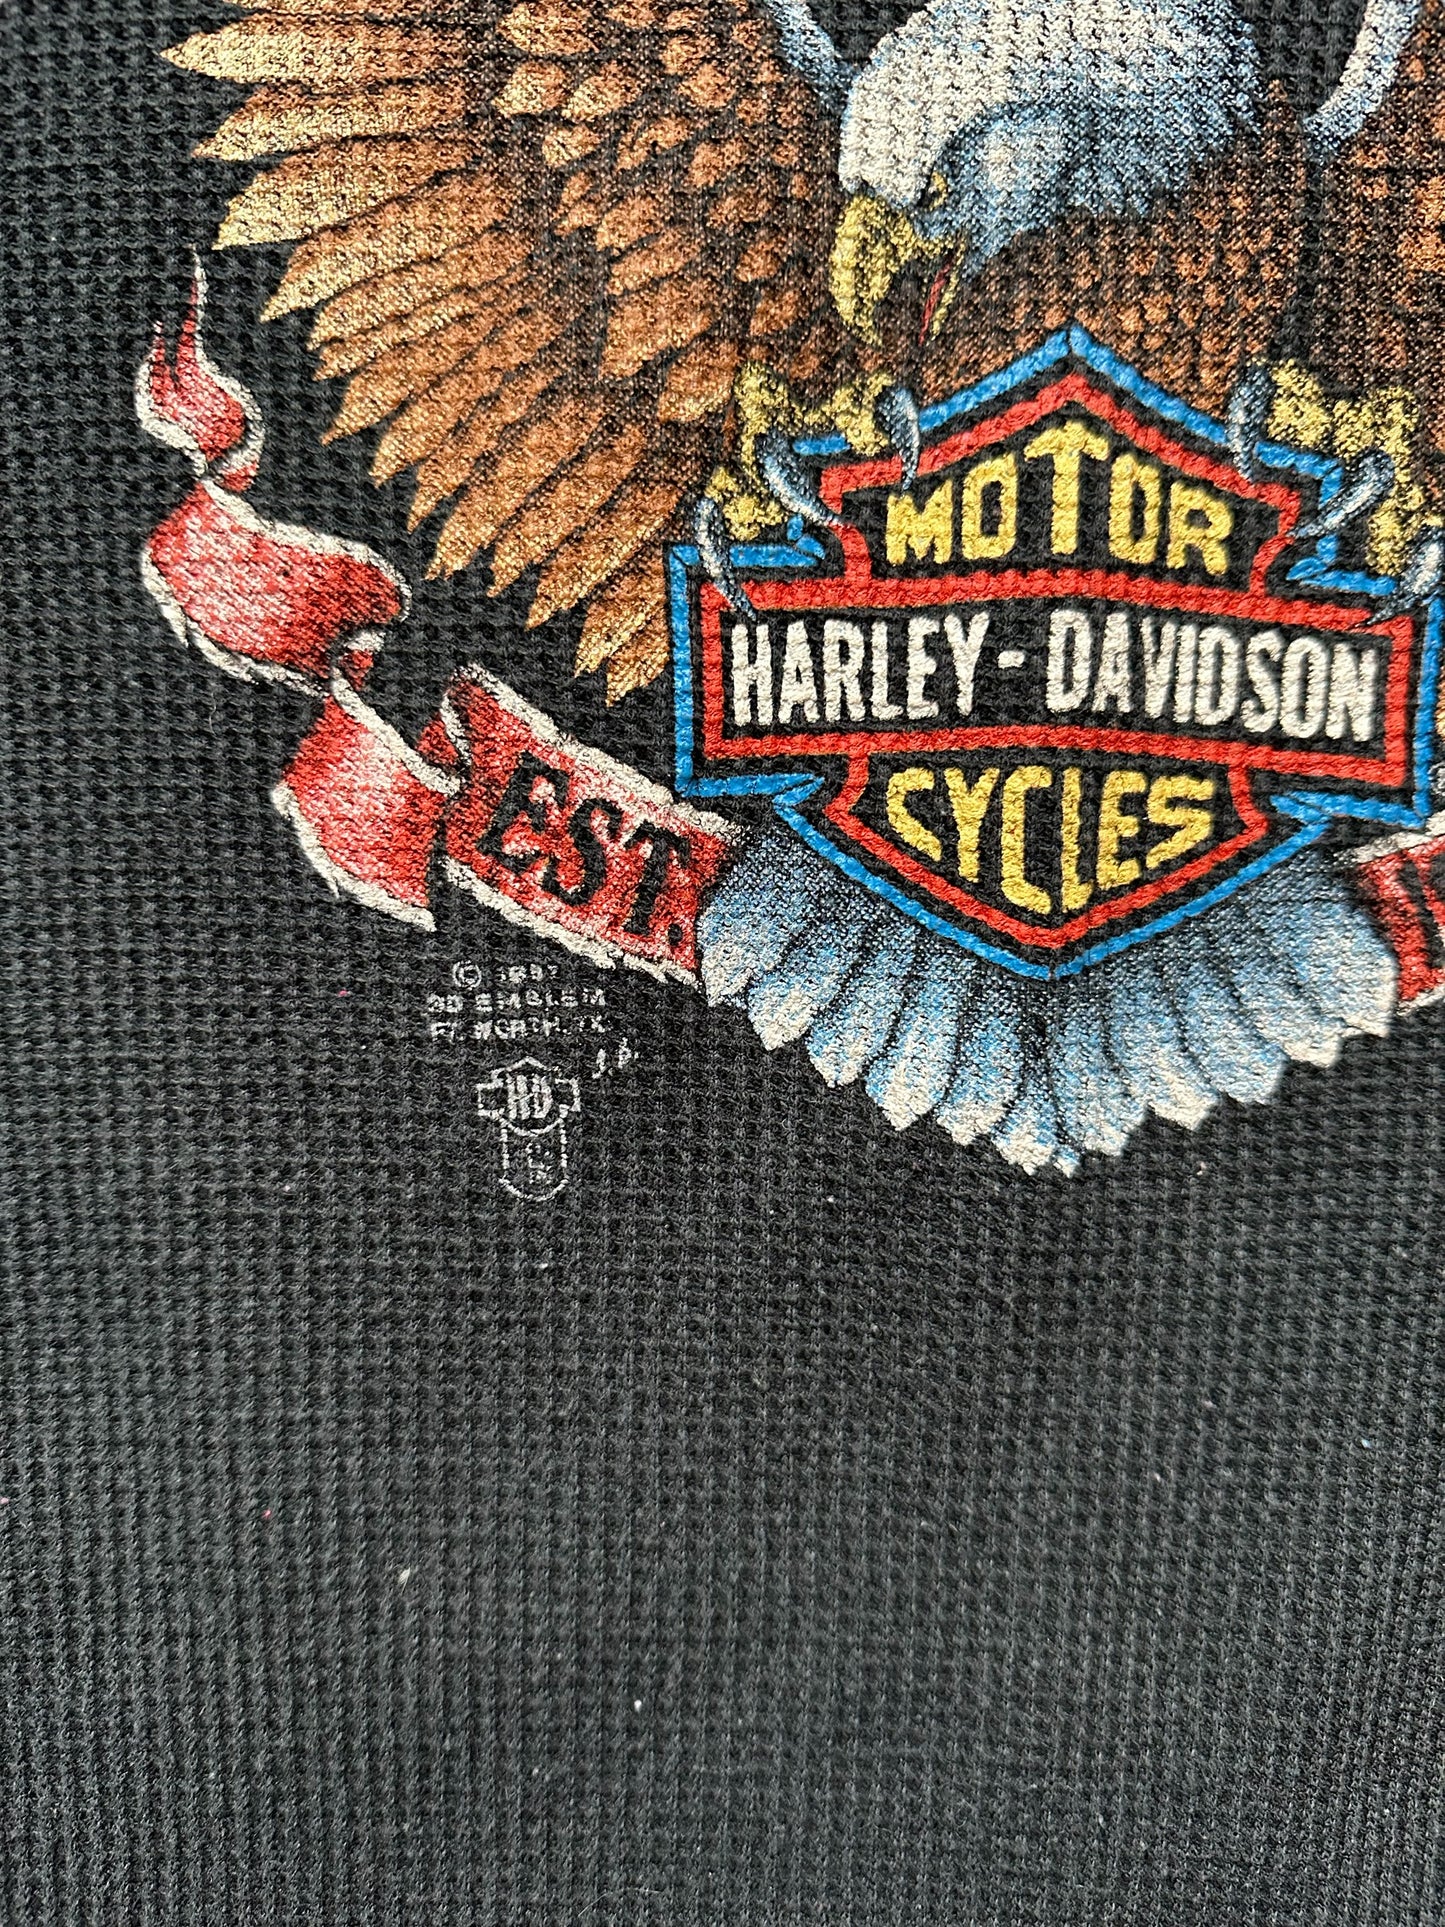 Lower Graphic Detail on Vintage Harley Davidson 3D Emblem Thermal Long Sleeve SZ L | Vintage Harley Tee | Barn Owl Vintage Seattle